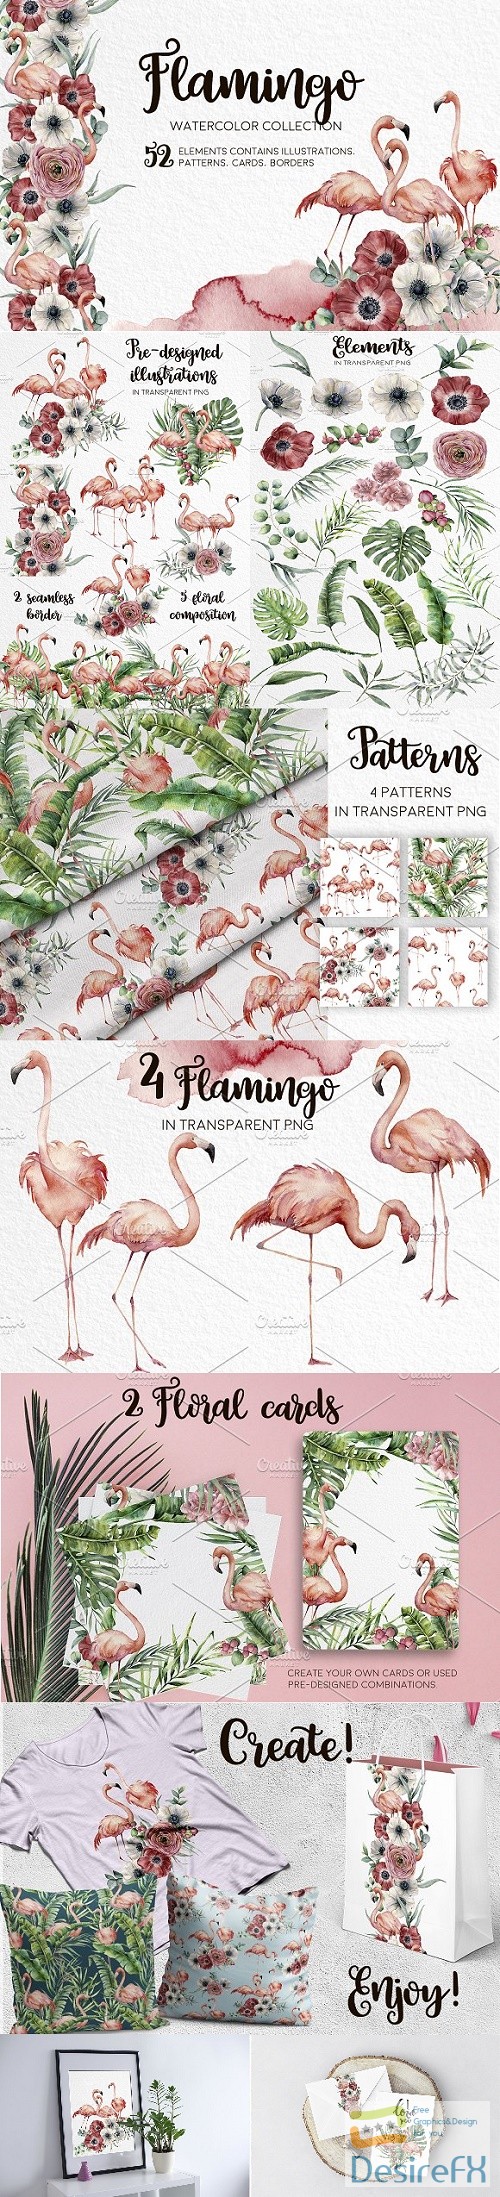 Flamingo. Watercolor collection - 2676681